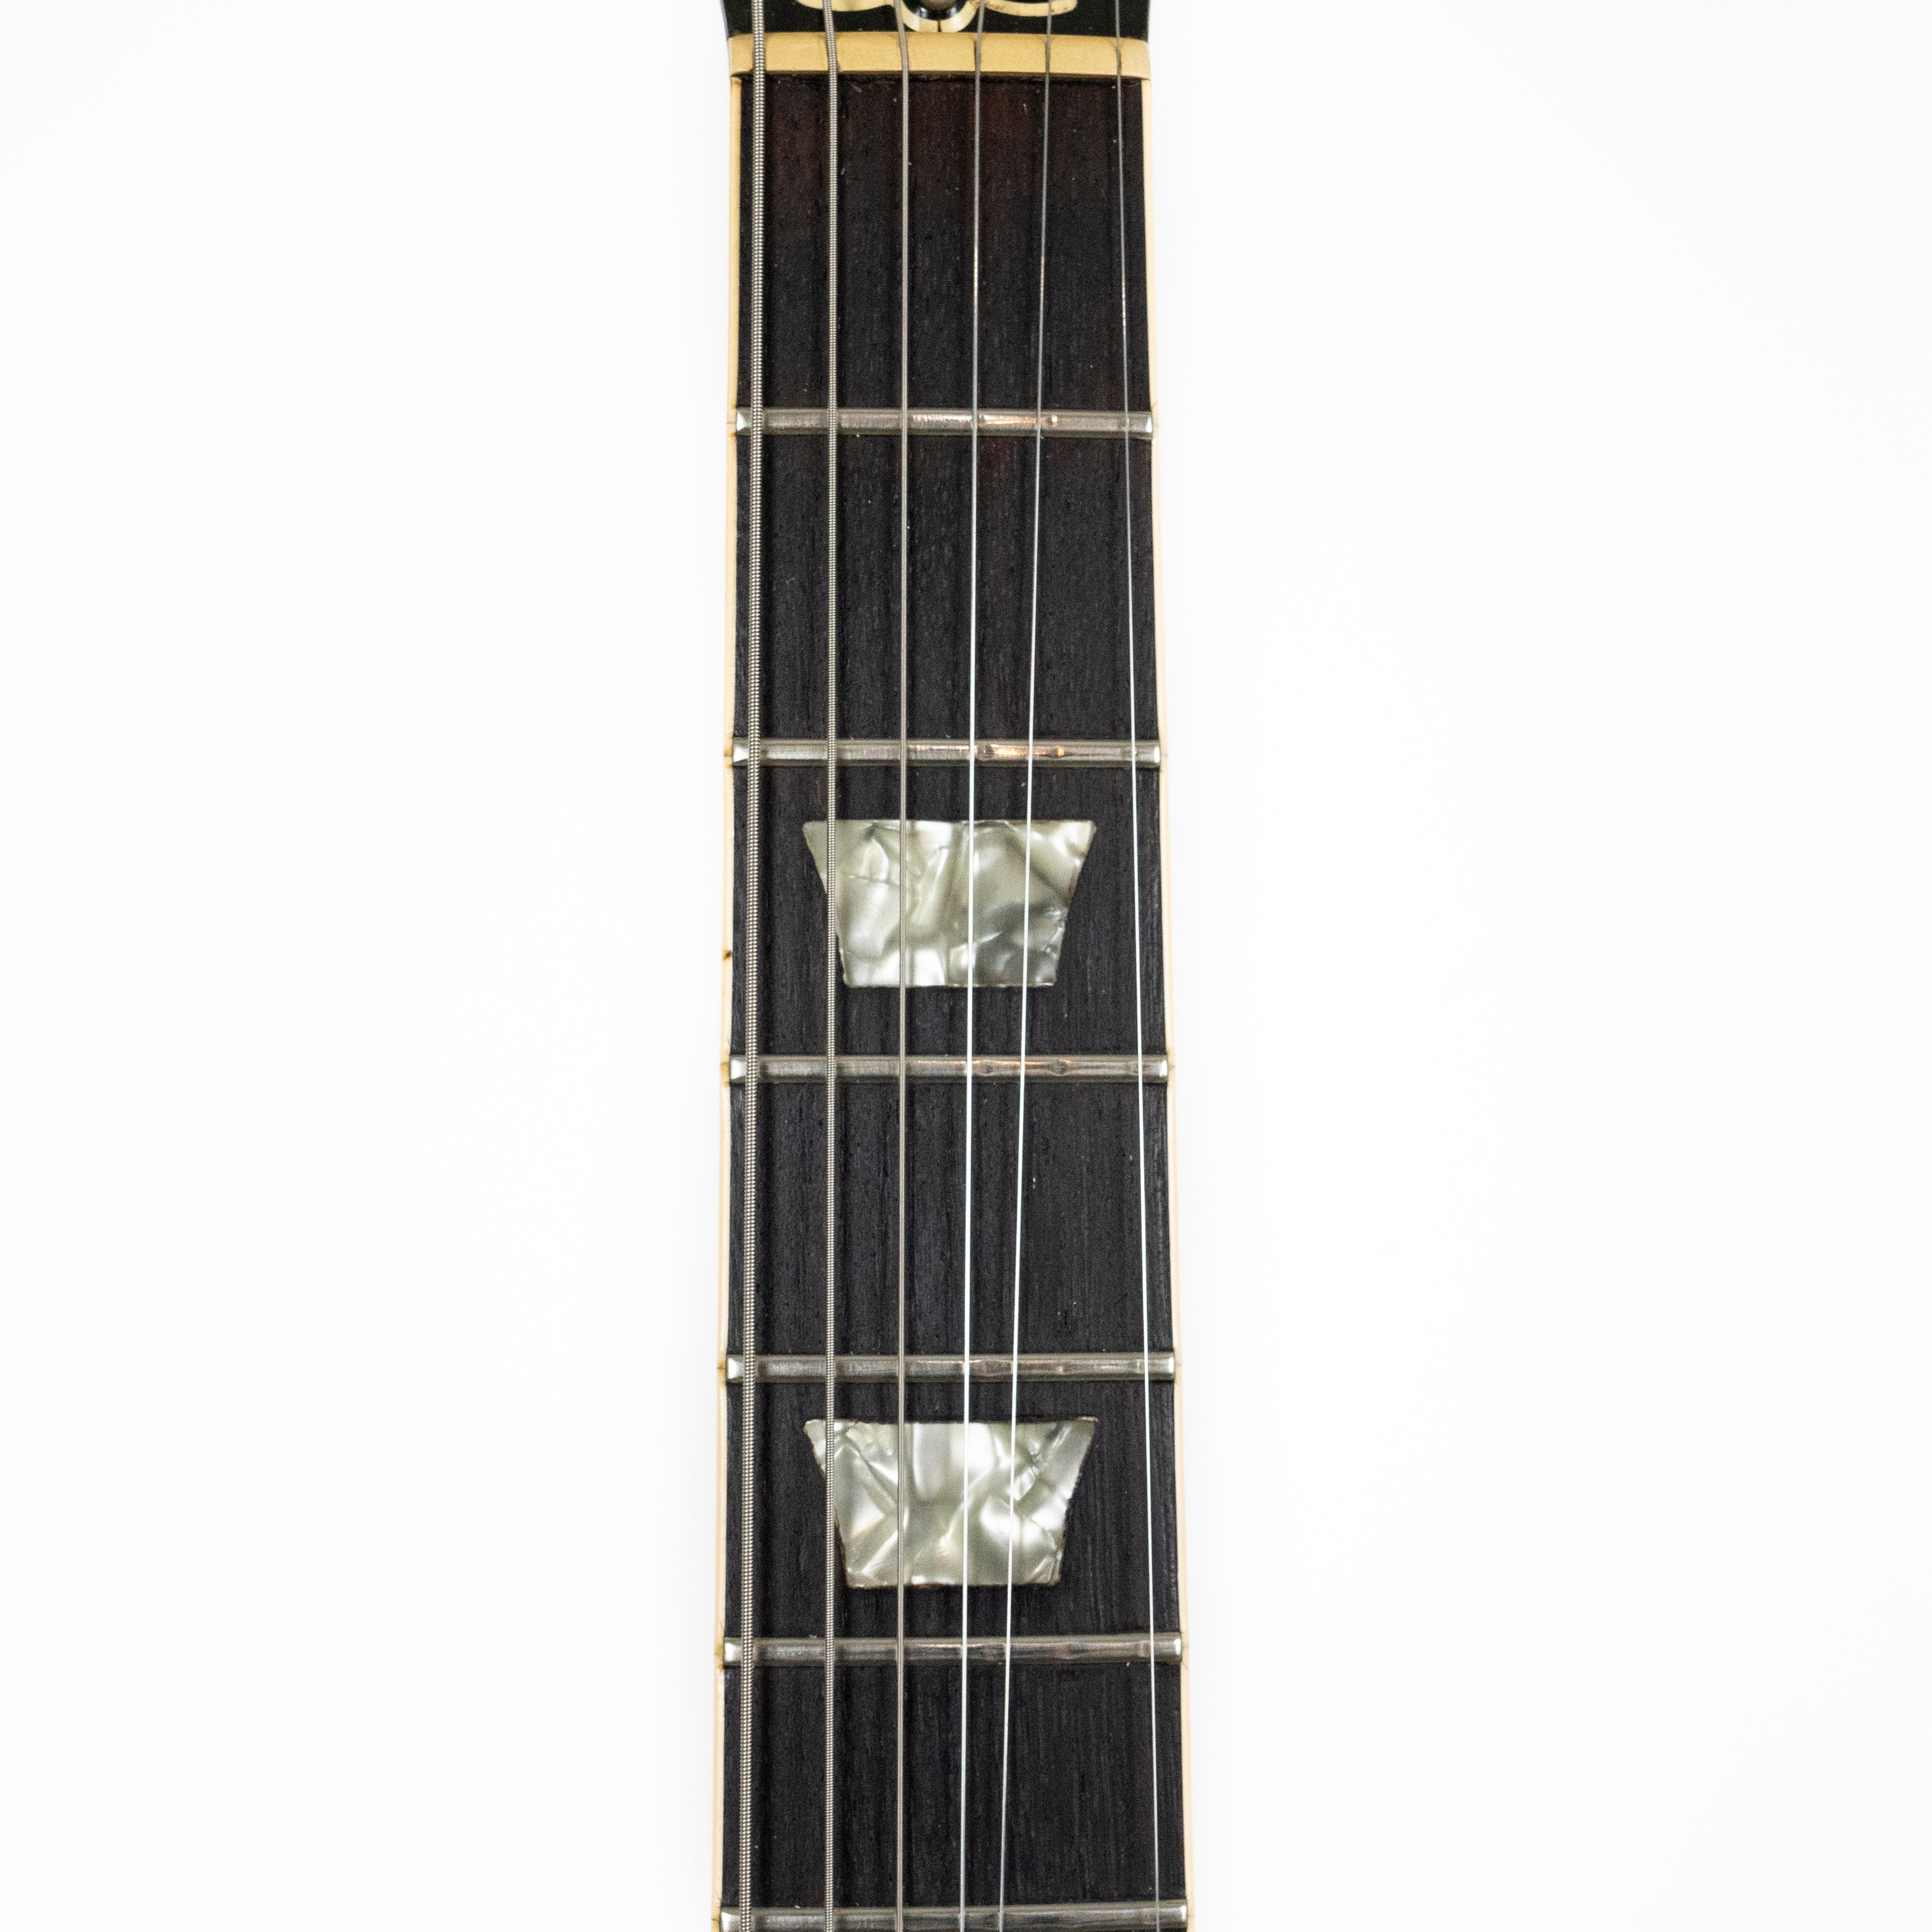 Gibson 1982 Les Paul Heritage Series Standard-80 Elite Cherry Sunburst